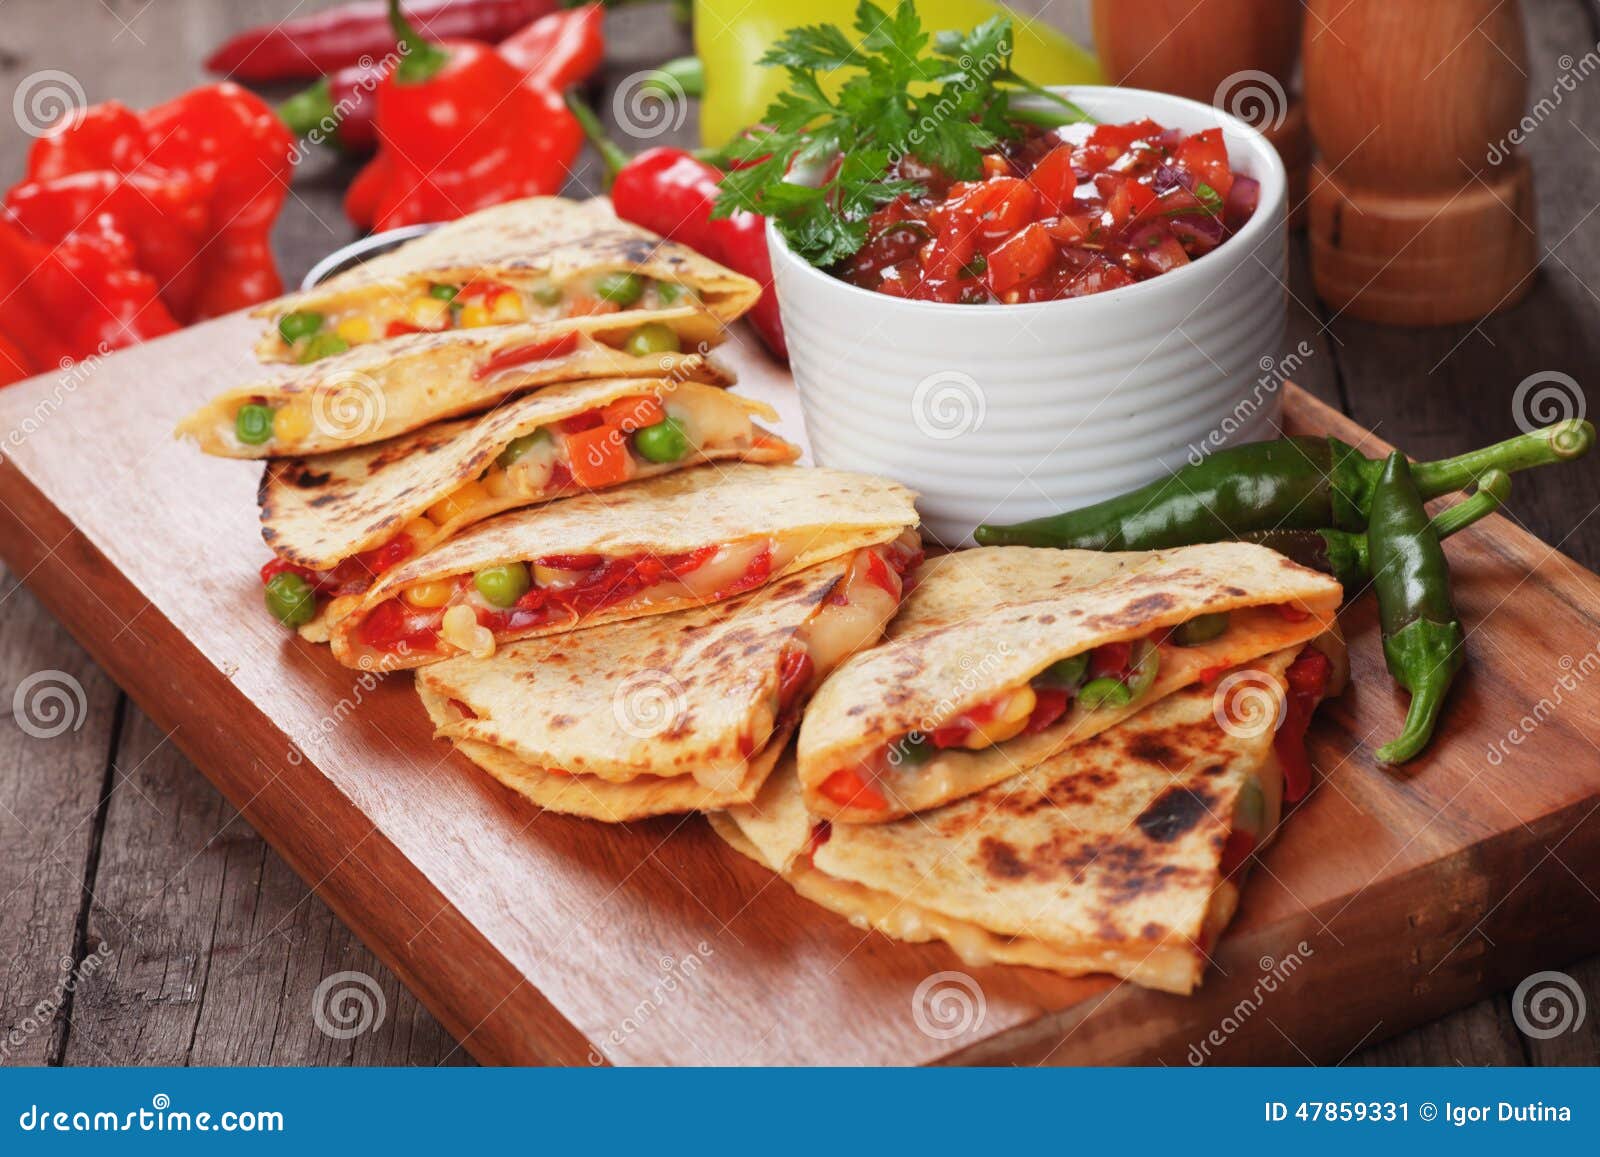 quesadillas with salsa